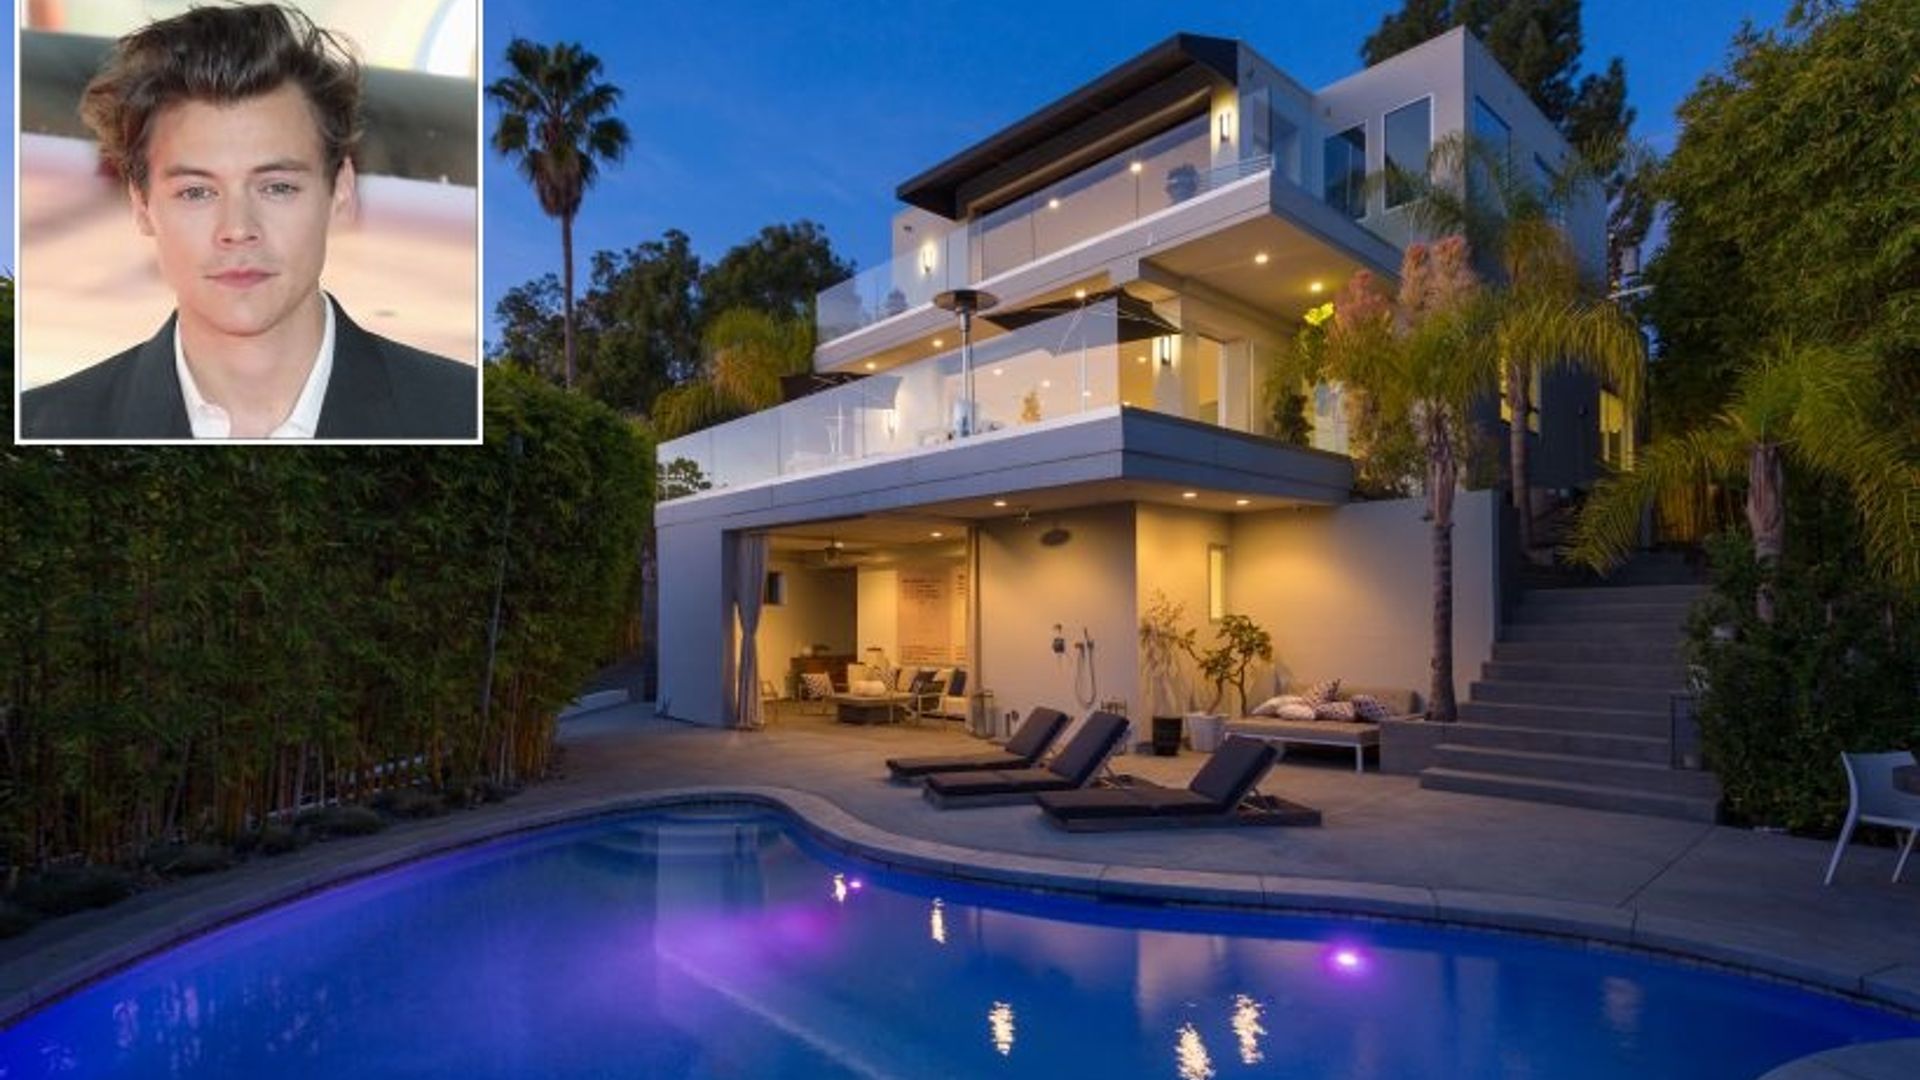 Harry Styles sells his LA home at a £500k loss – take a peek inside